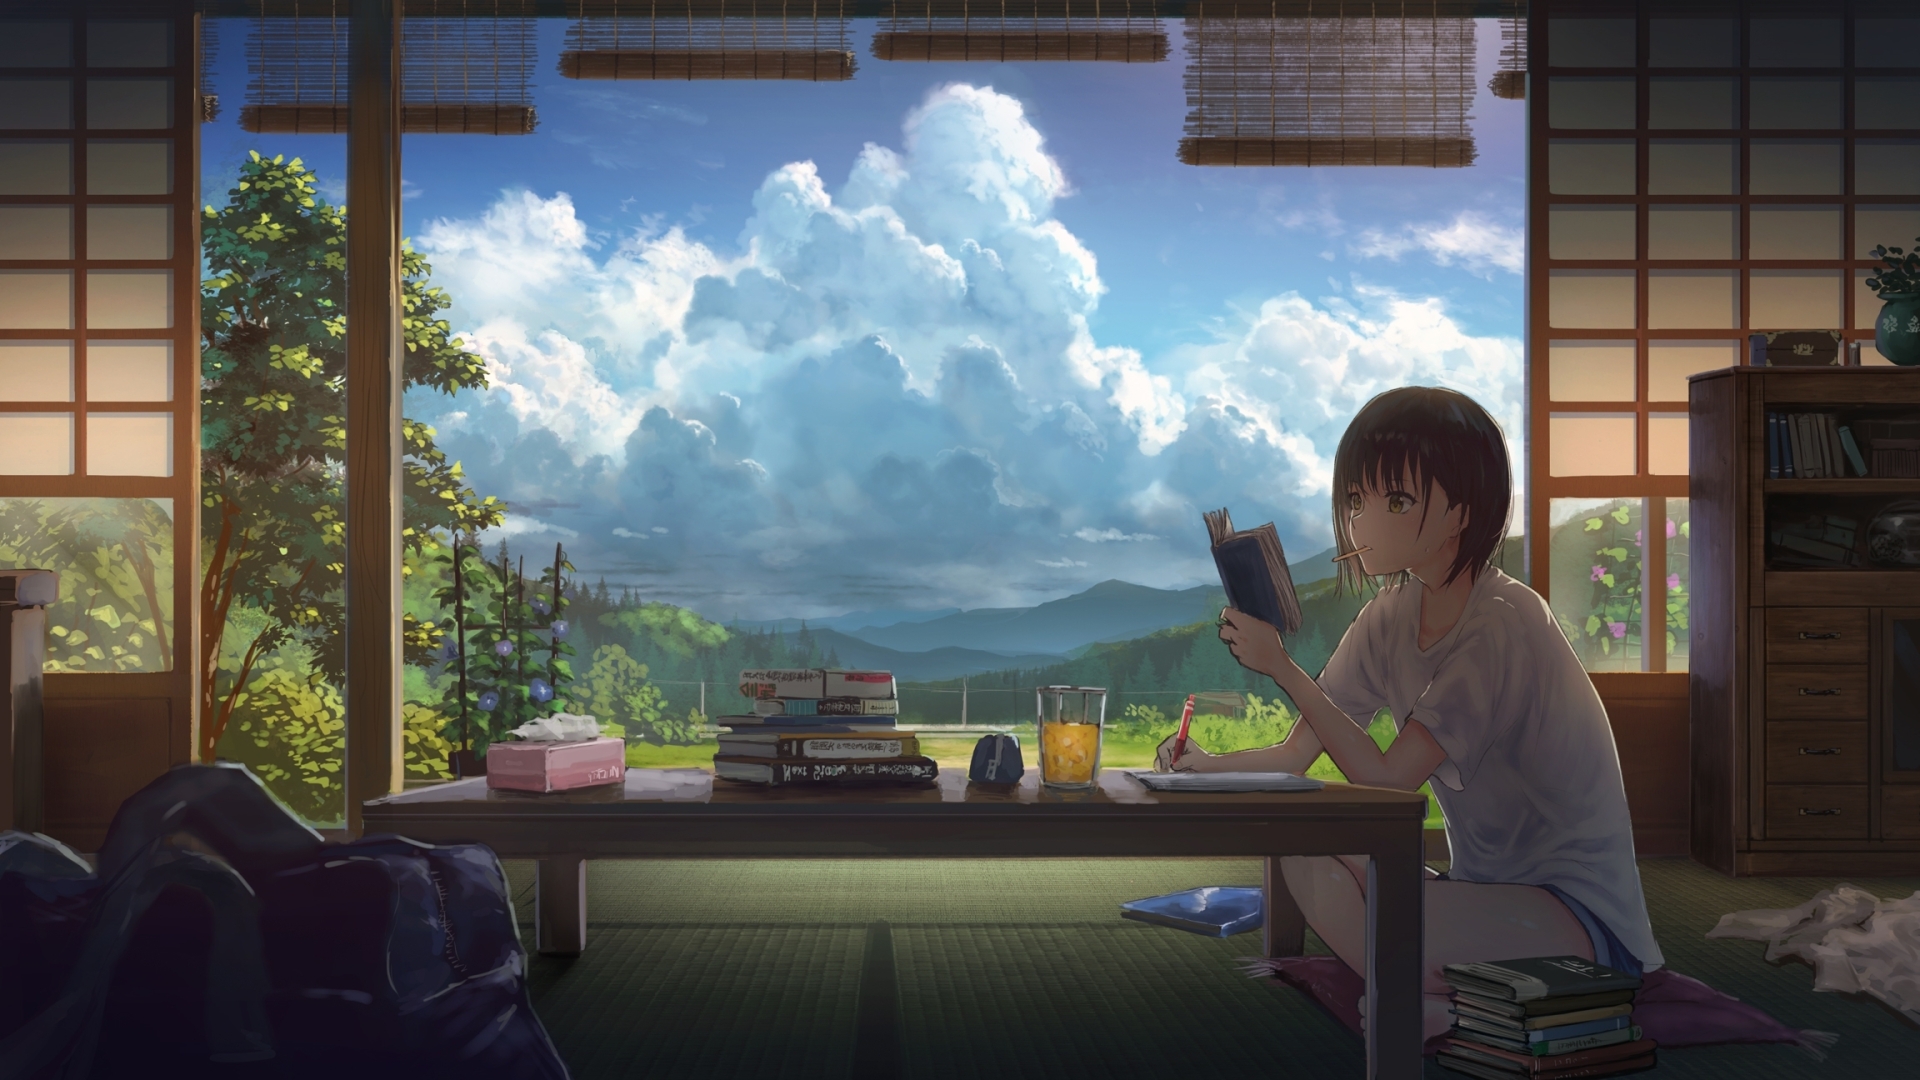 Wallpaper Clouds, Anime Girl, Scenic, Short Hair, Reading, Summer:2304x1296